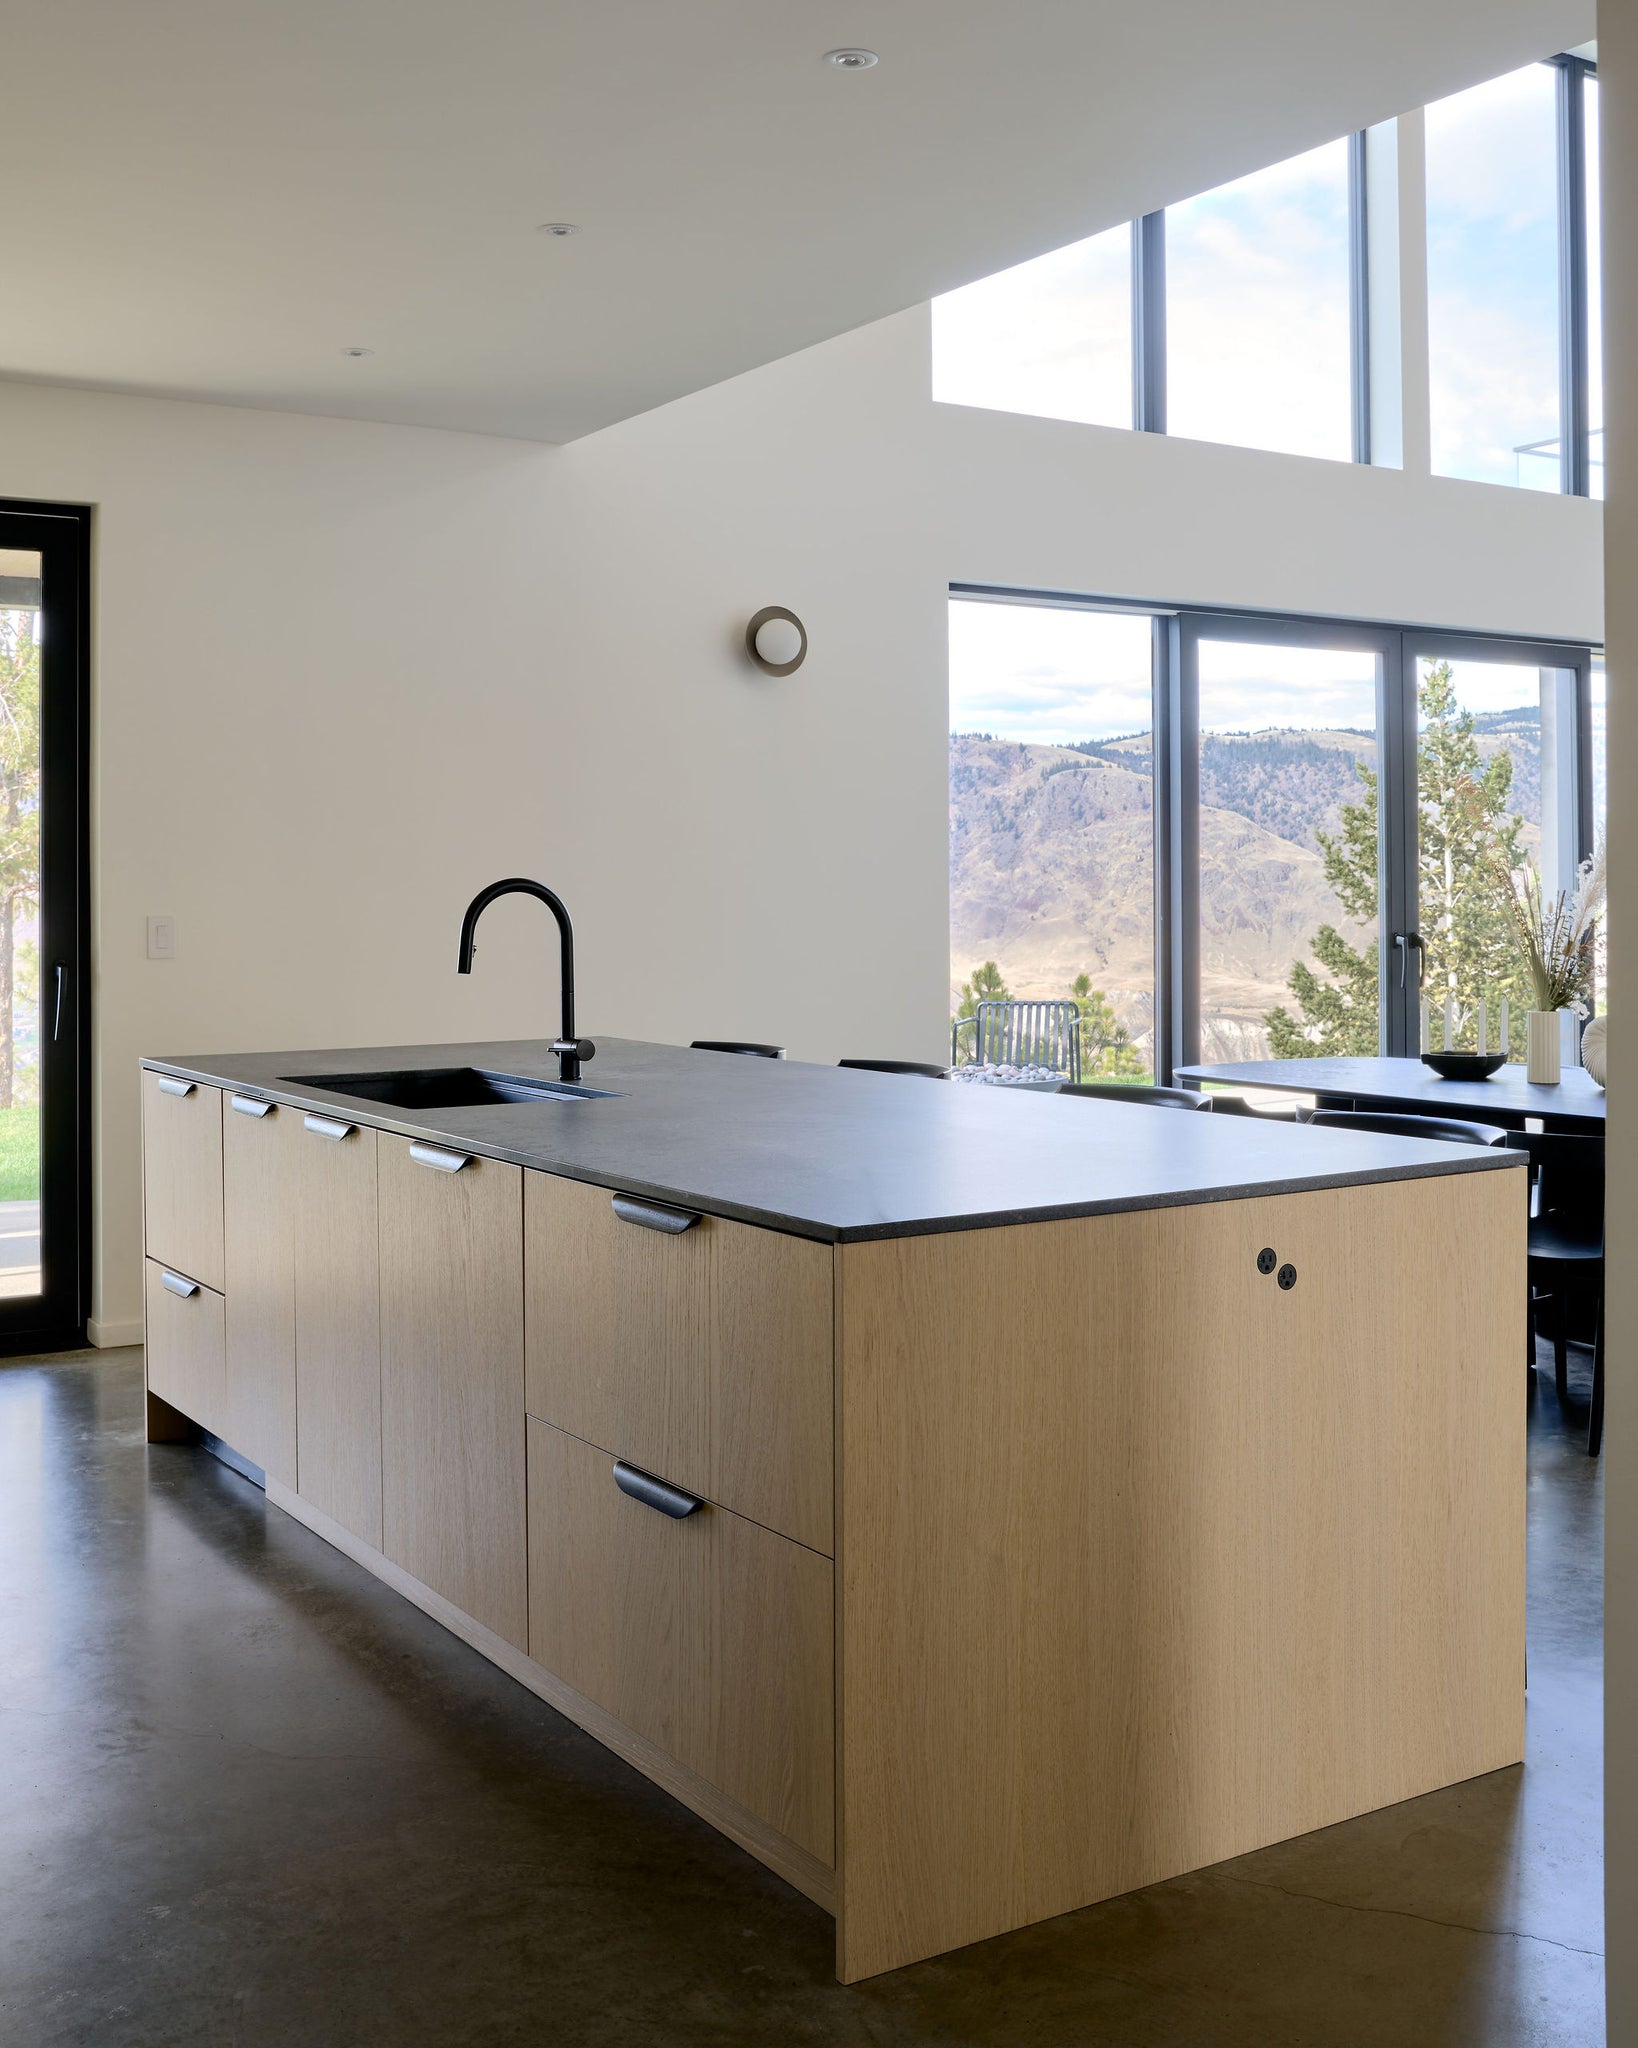 kitchen island swede kitchens hooga interior design caesarstone rugged concrete backsplash white oak kitchen